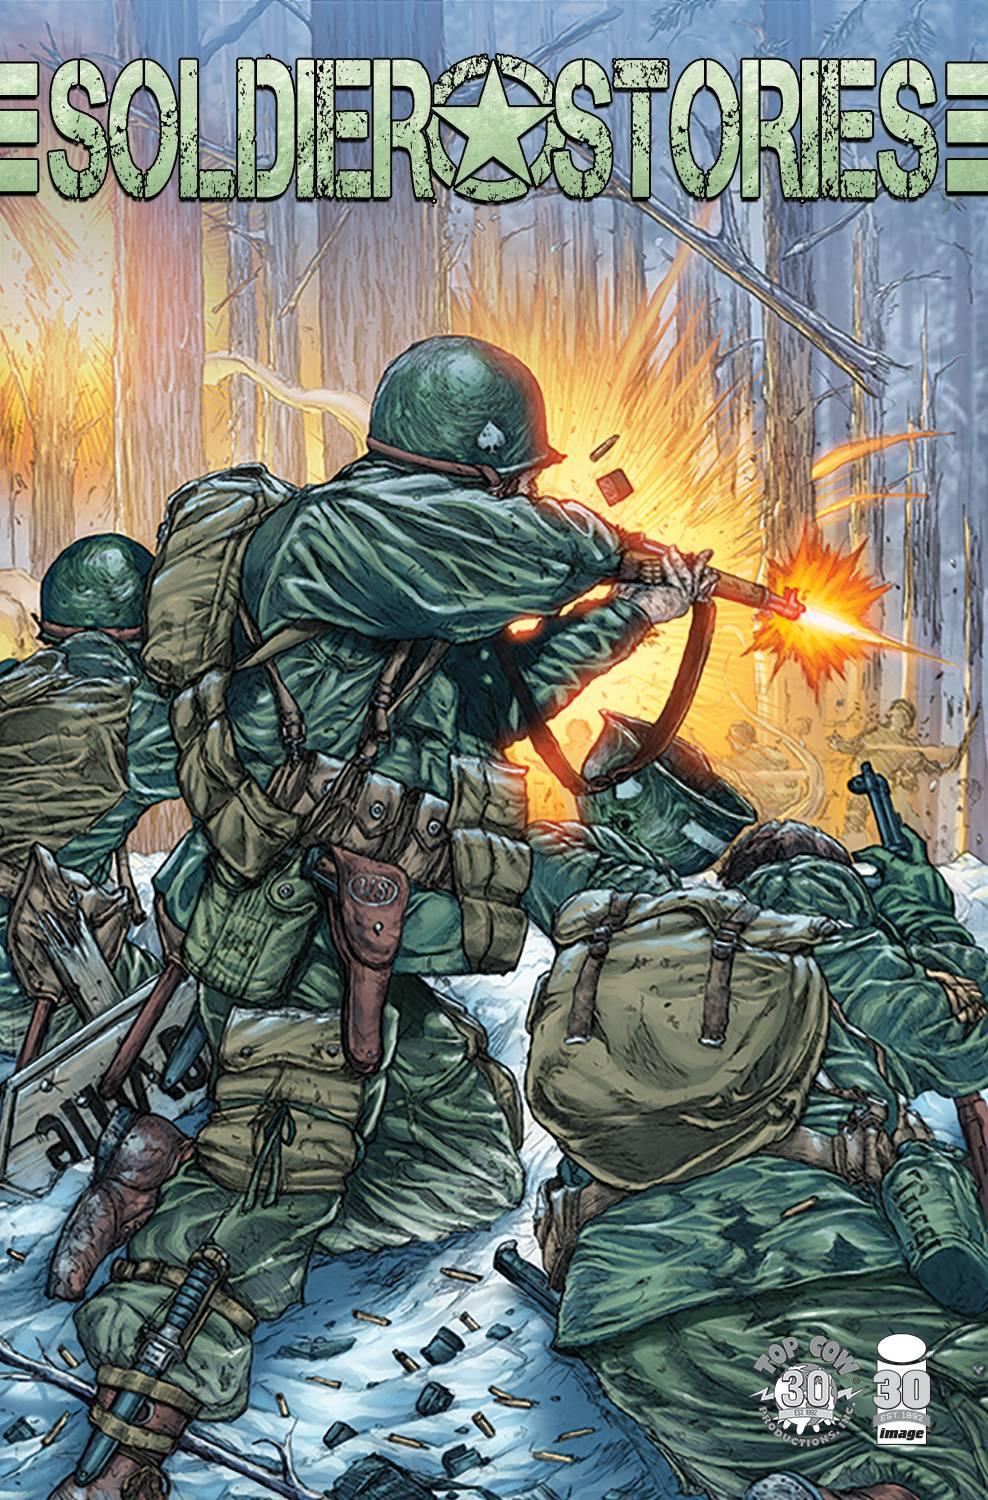 SOLDIER STORIES #1 CVR A TUCCI (ONE-SHOT) - Kings Comics